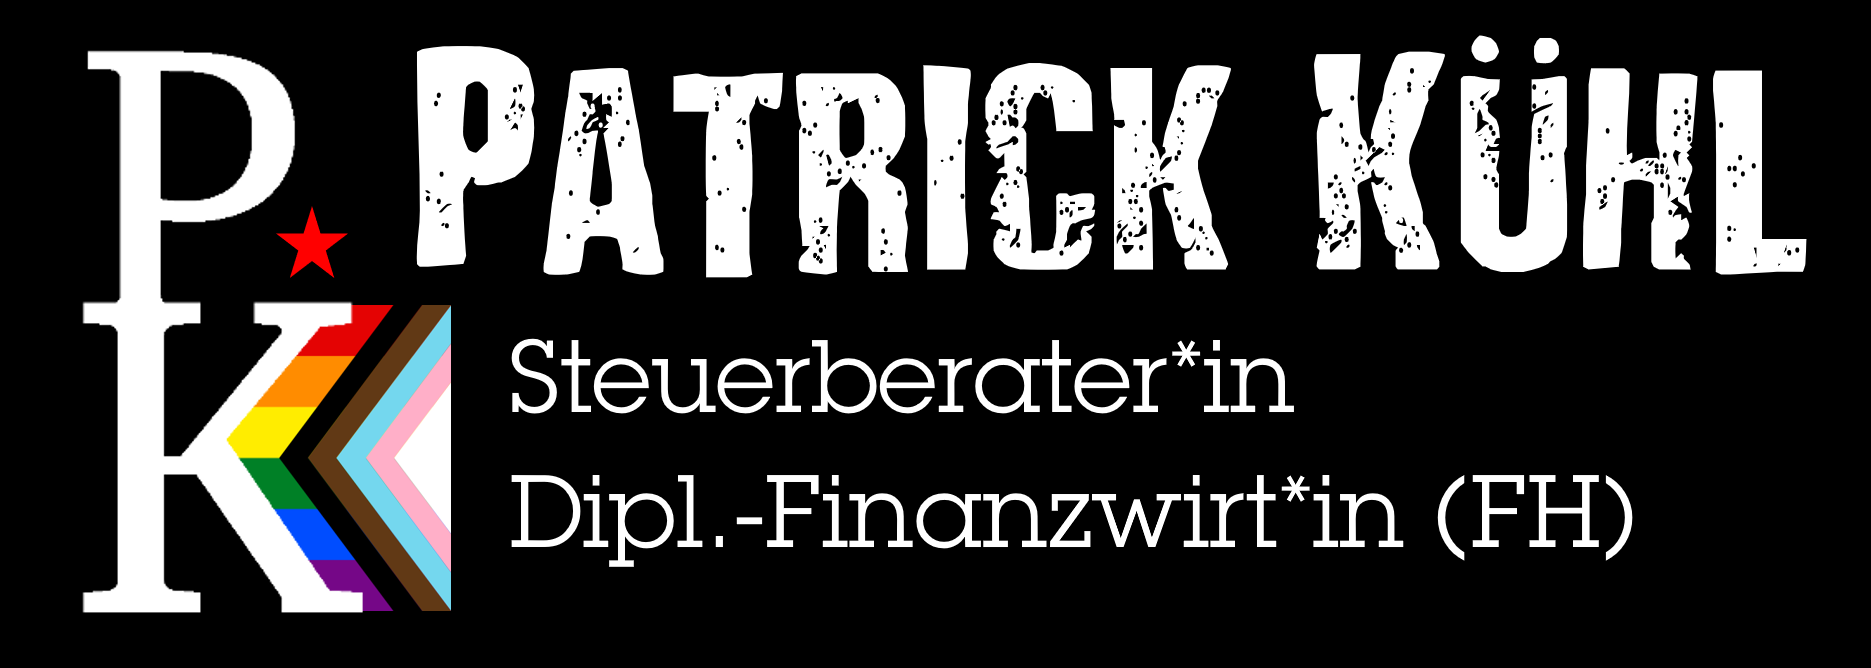 Patrick Kühl – Steuerberater*in